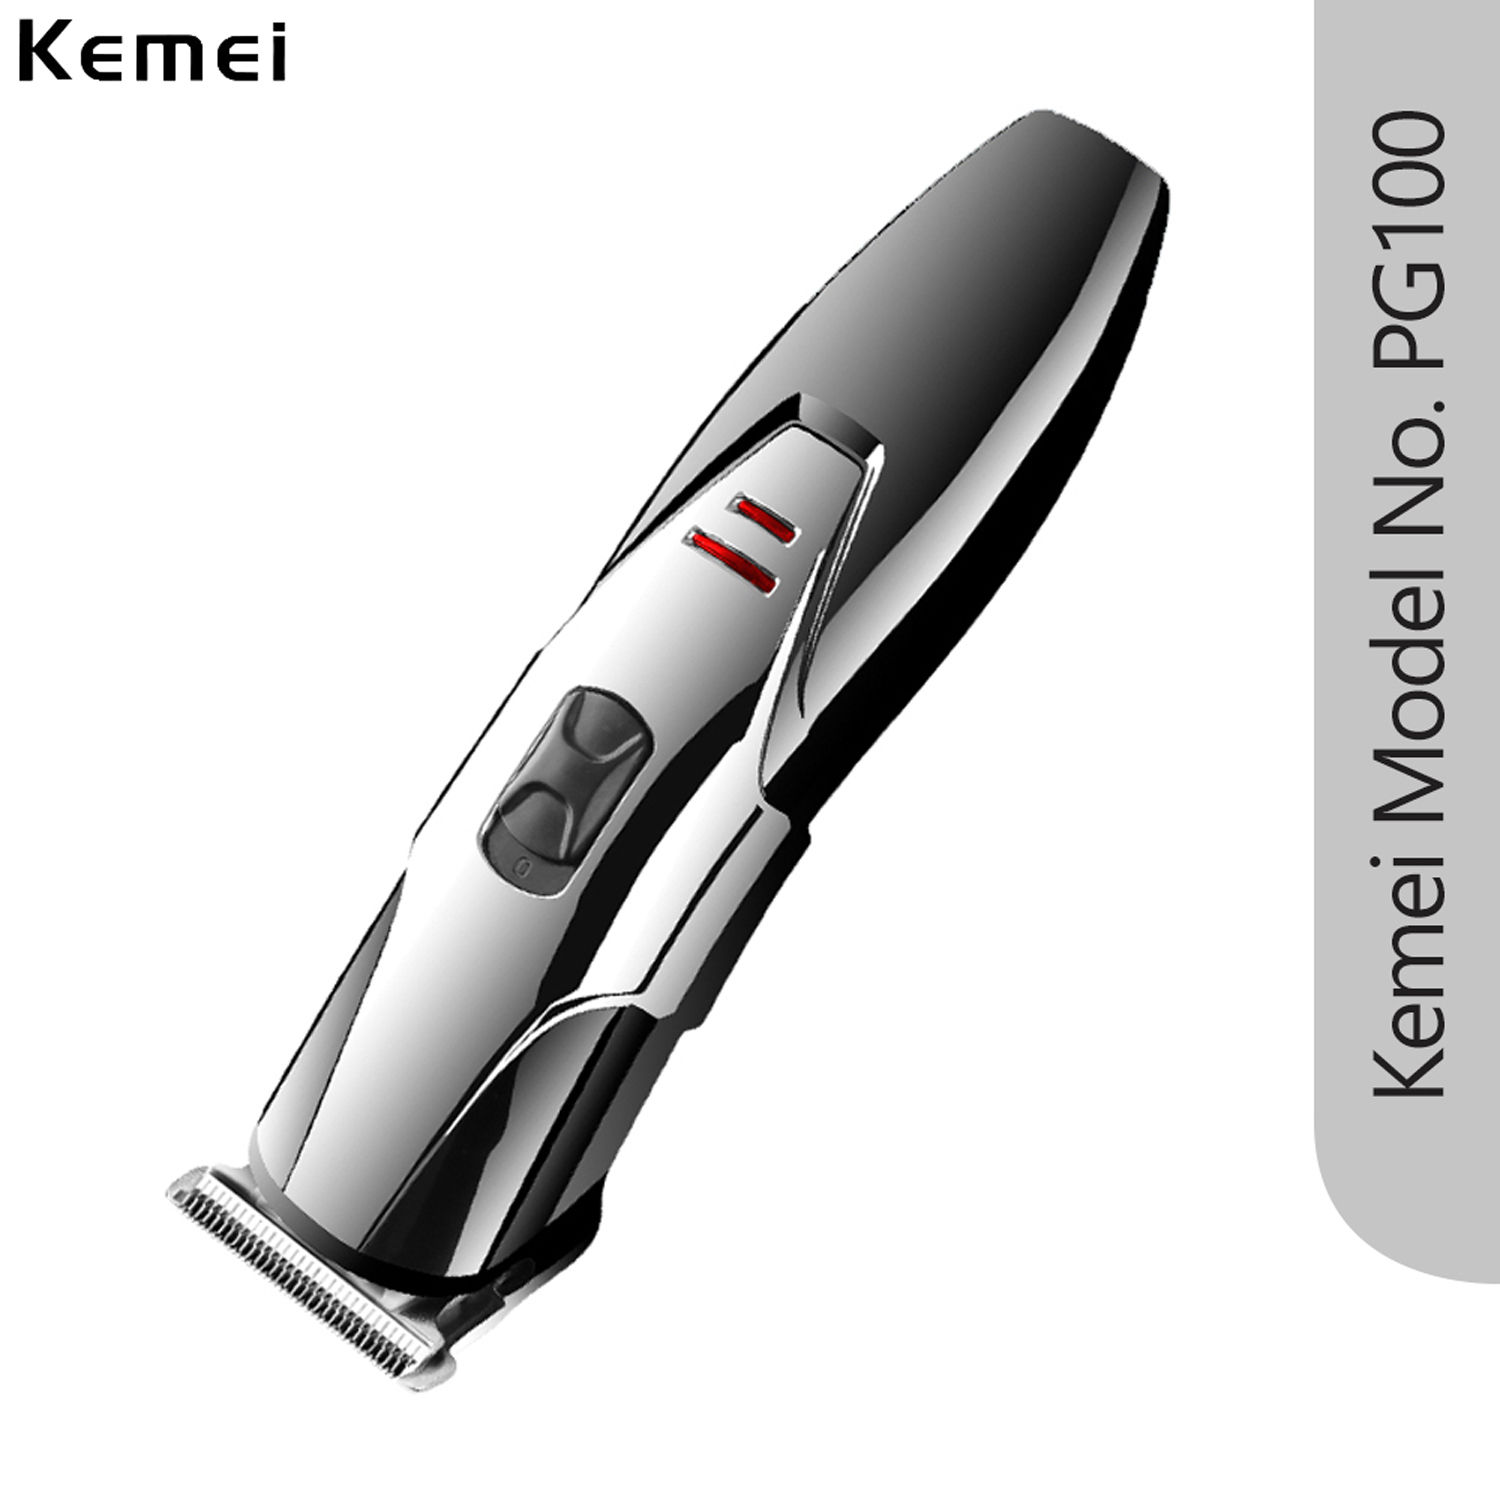 Kemei KM-PG100 Rechargeable, Cordless Trimmer For Men (Multicolor)